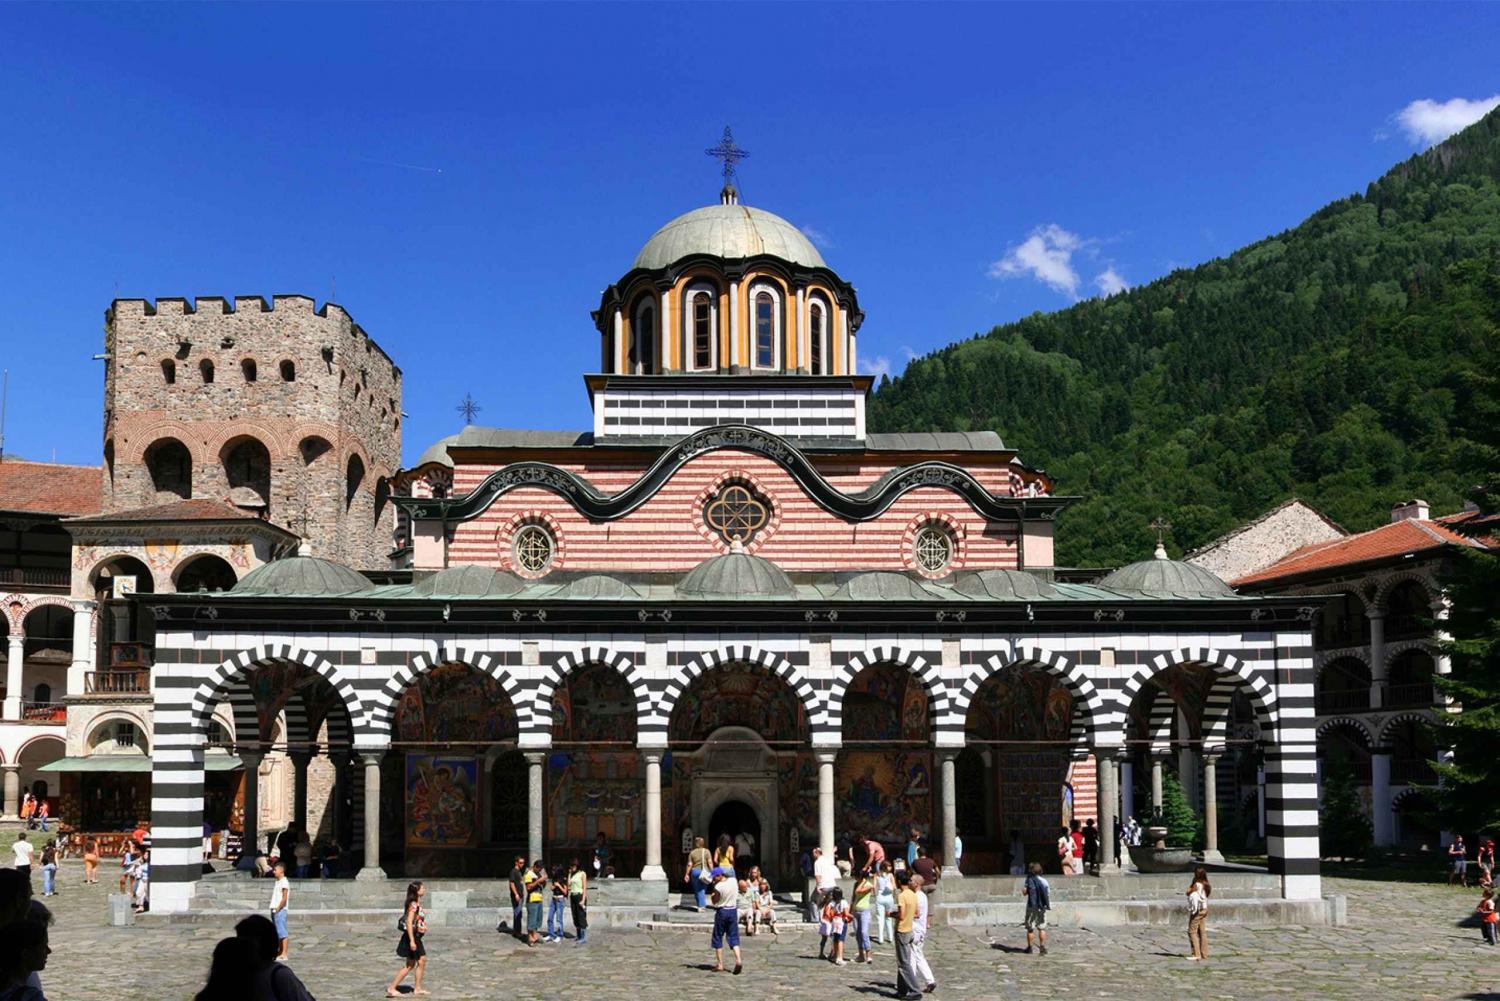 From Sofia: Rila Monastery, Boyana, Bells, & History Museum